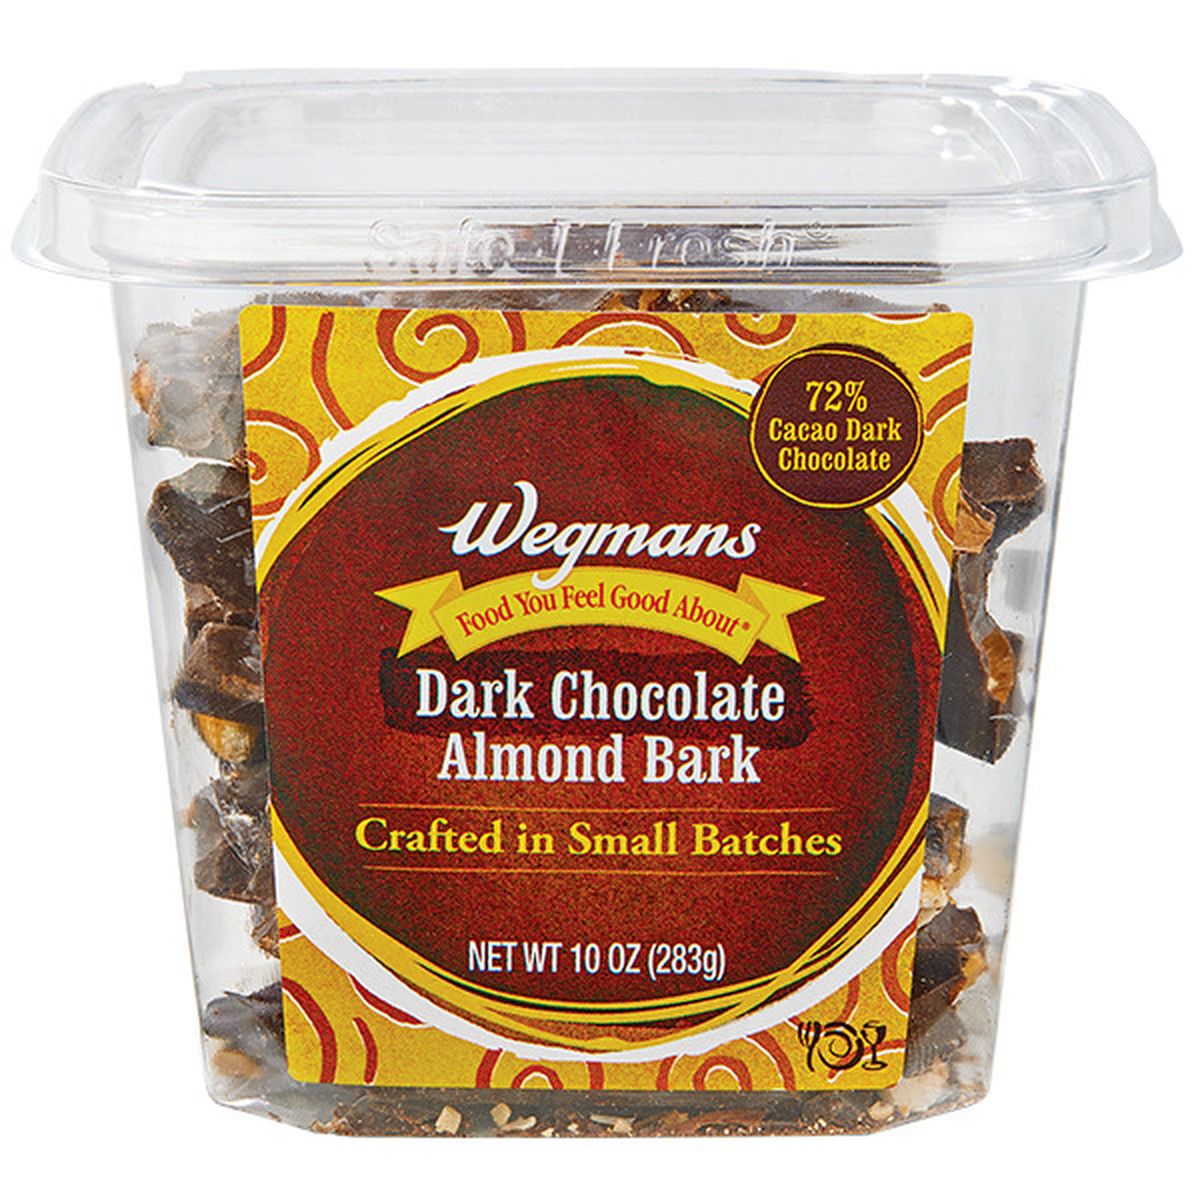 Calories in Wegmans Dark Chocolate Almond Bark